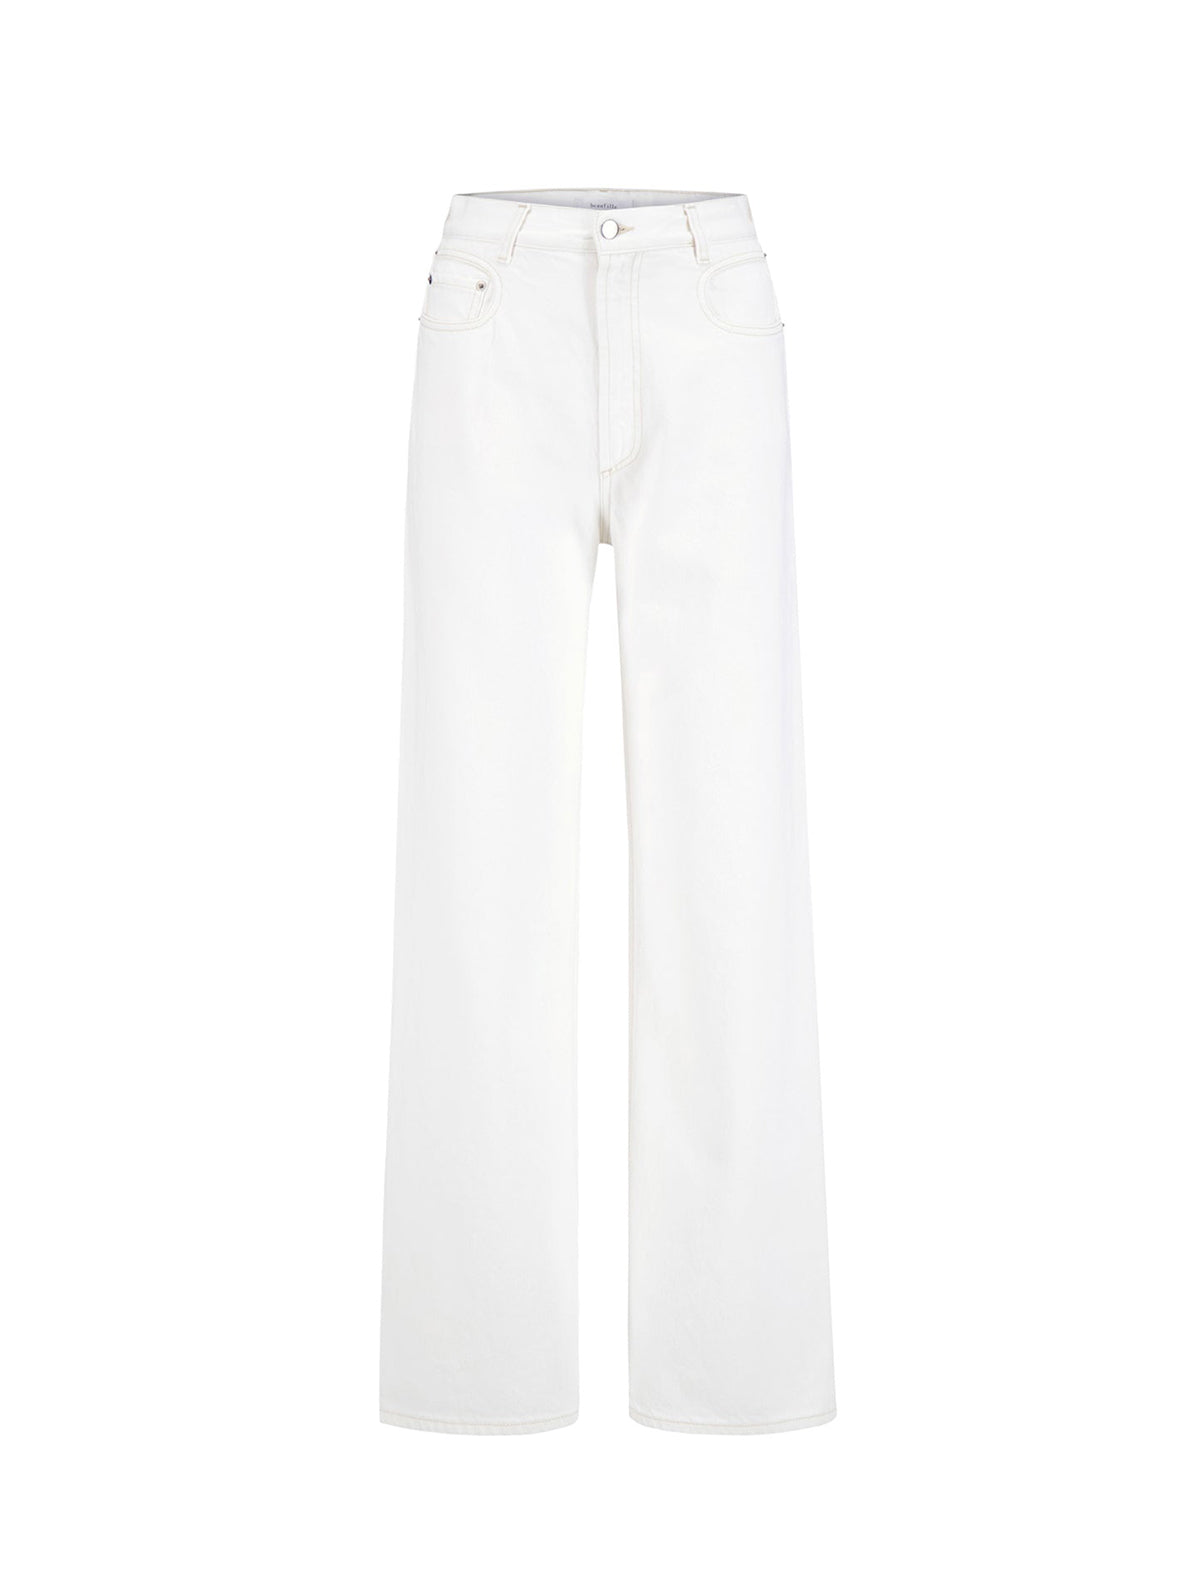 BEAUFILLE Elipse Denim Jeans in White